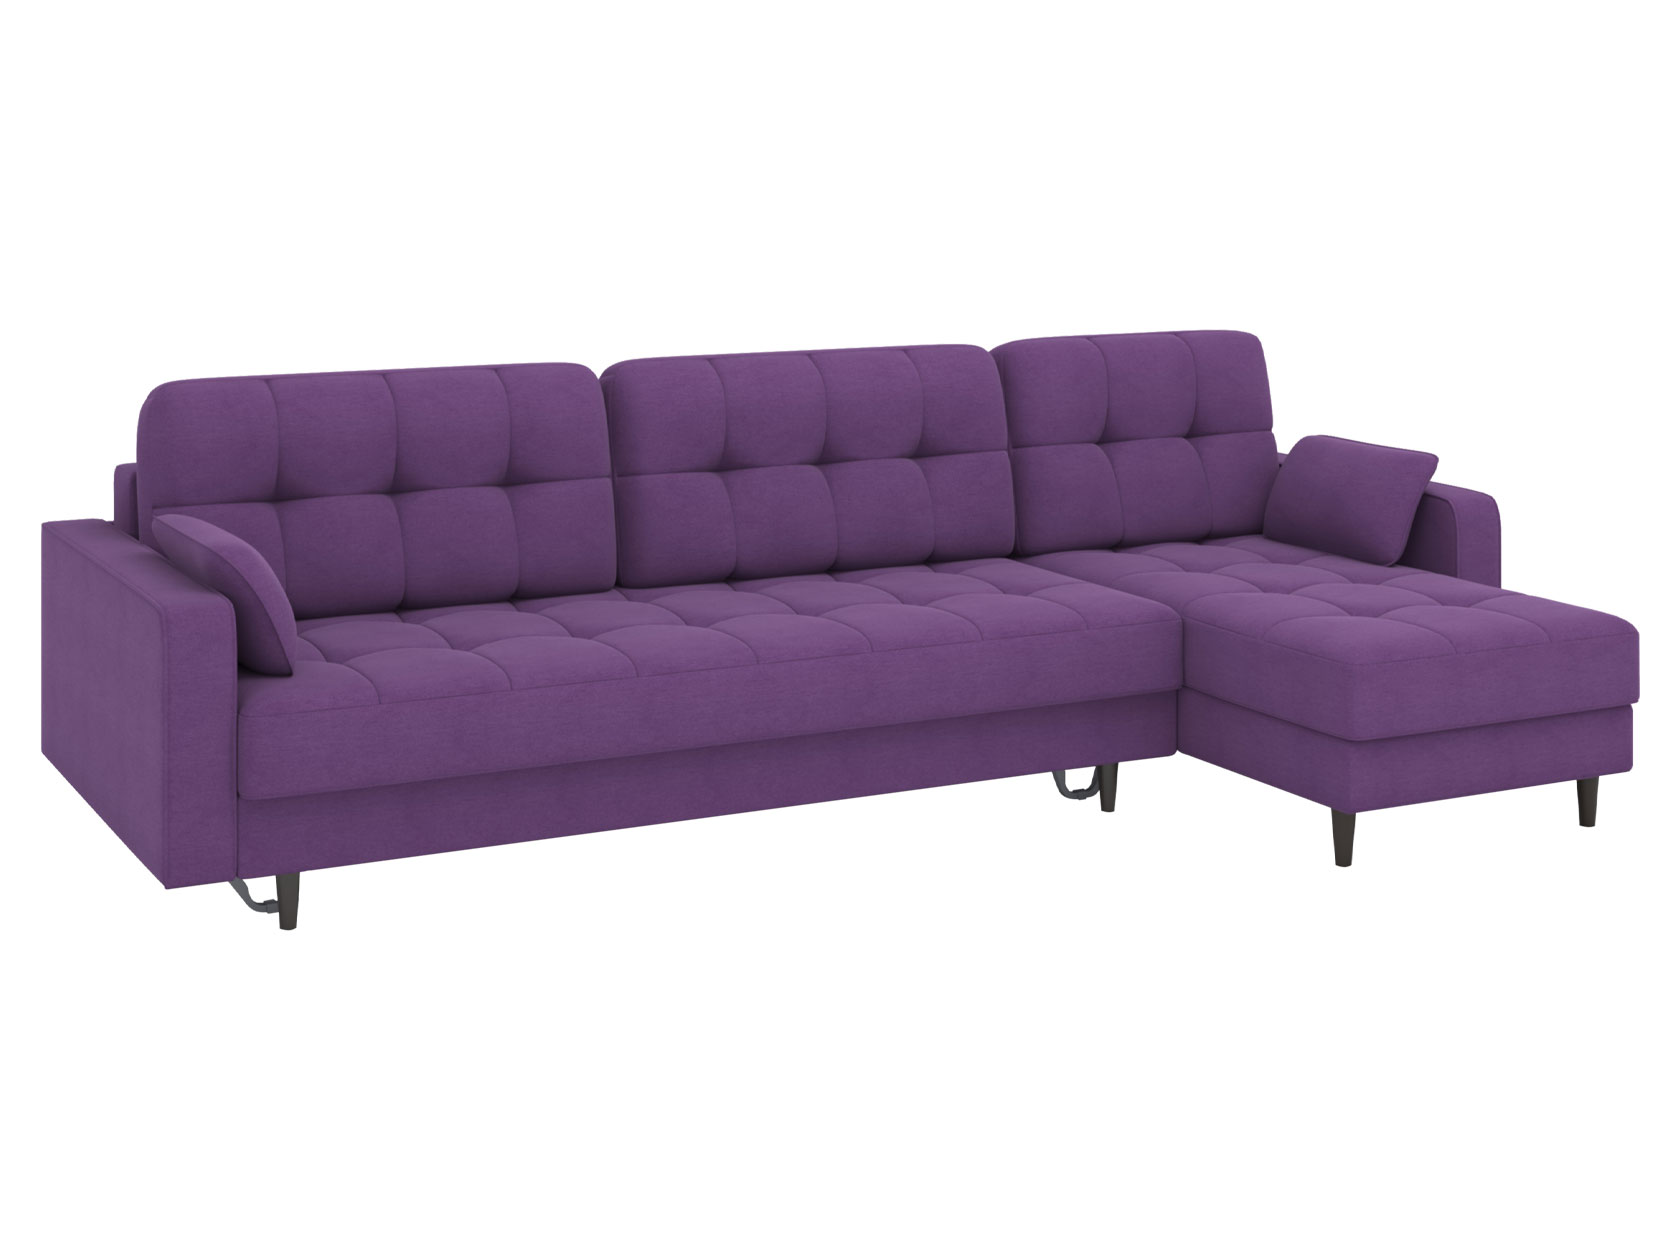 Угловой диван с оттоманкой Диван Санфорд с оттоманкой макси Санфорд Макси фото 19